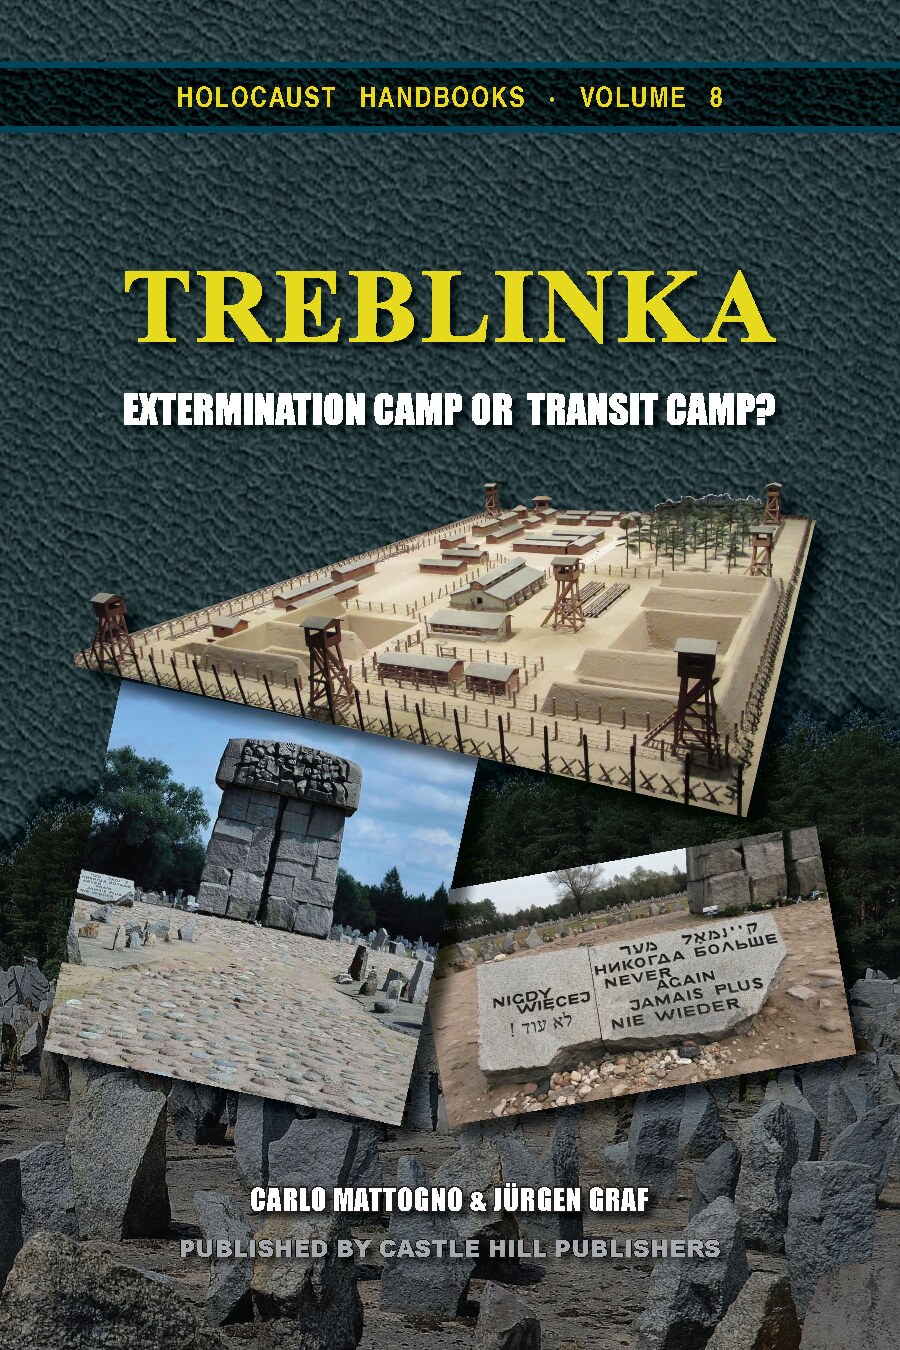 Treblinka: Extermination Camp or Transit Camp?